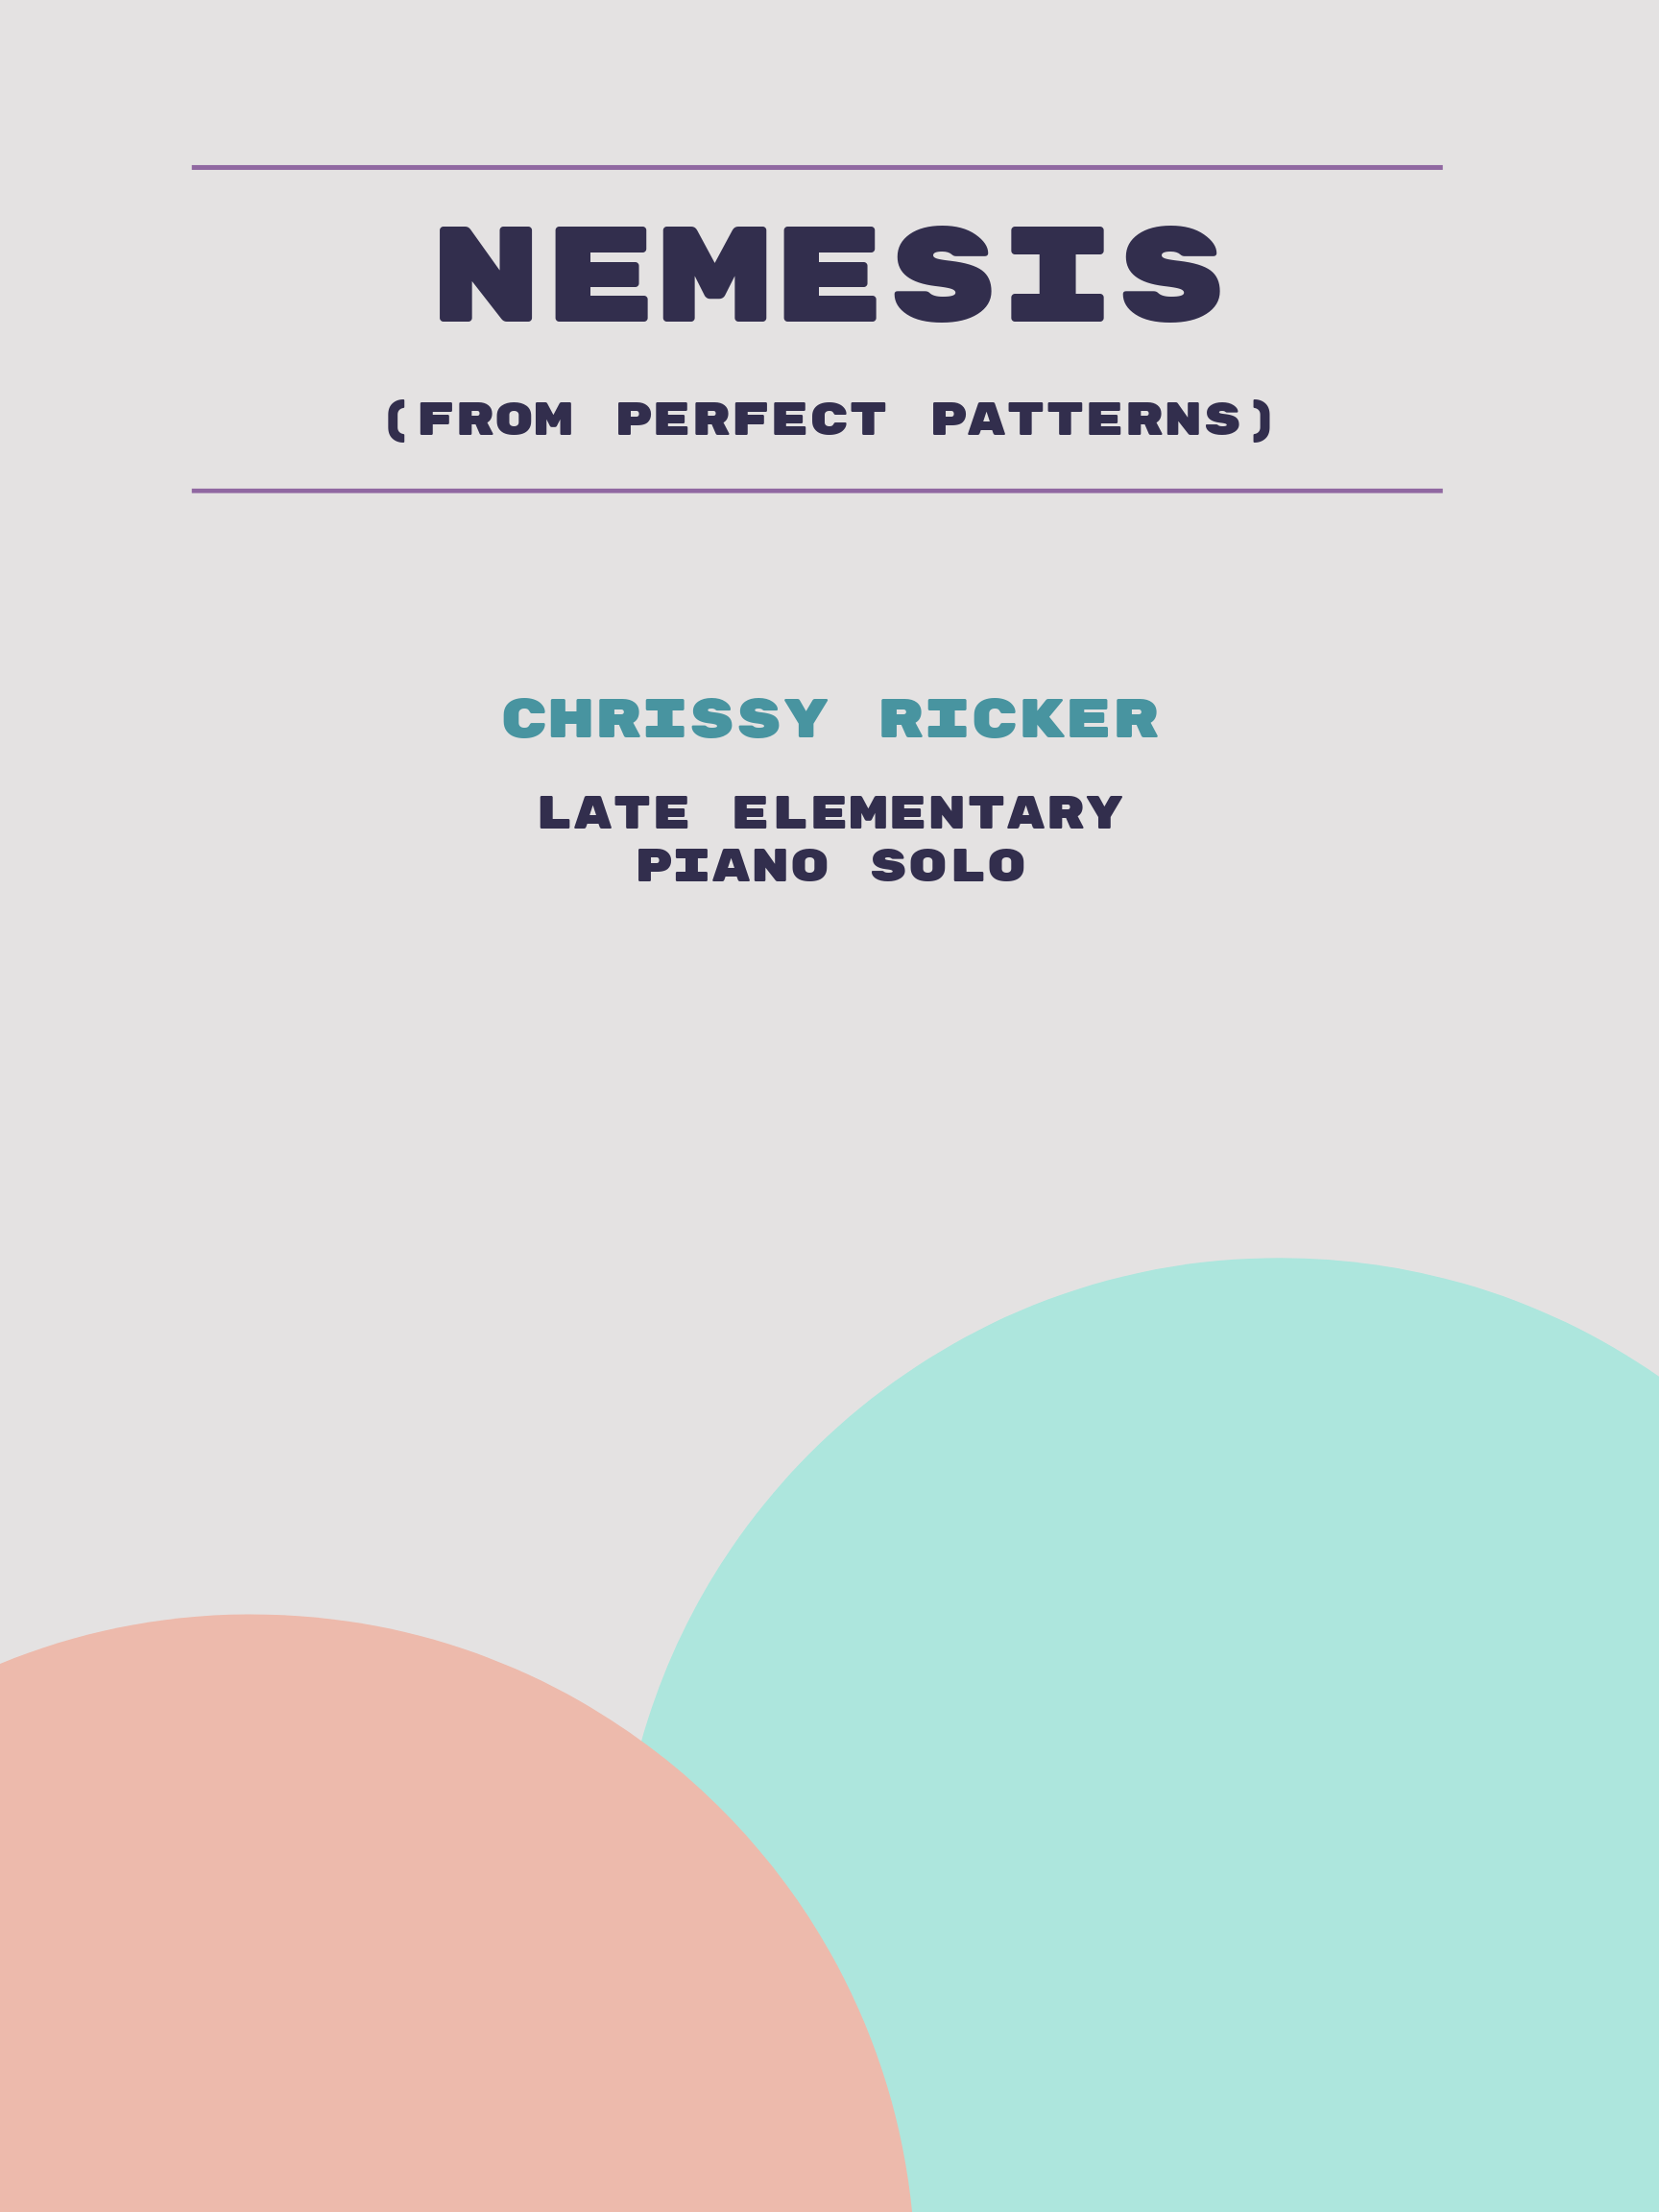 Nemesis by Chrissy Ricker